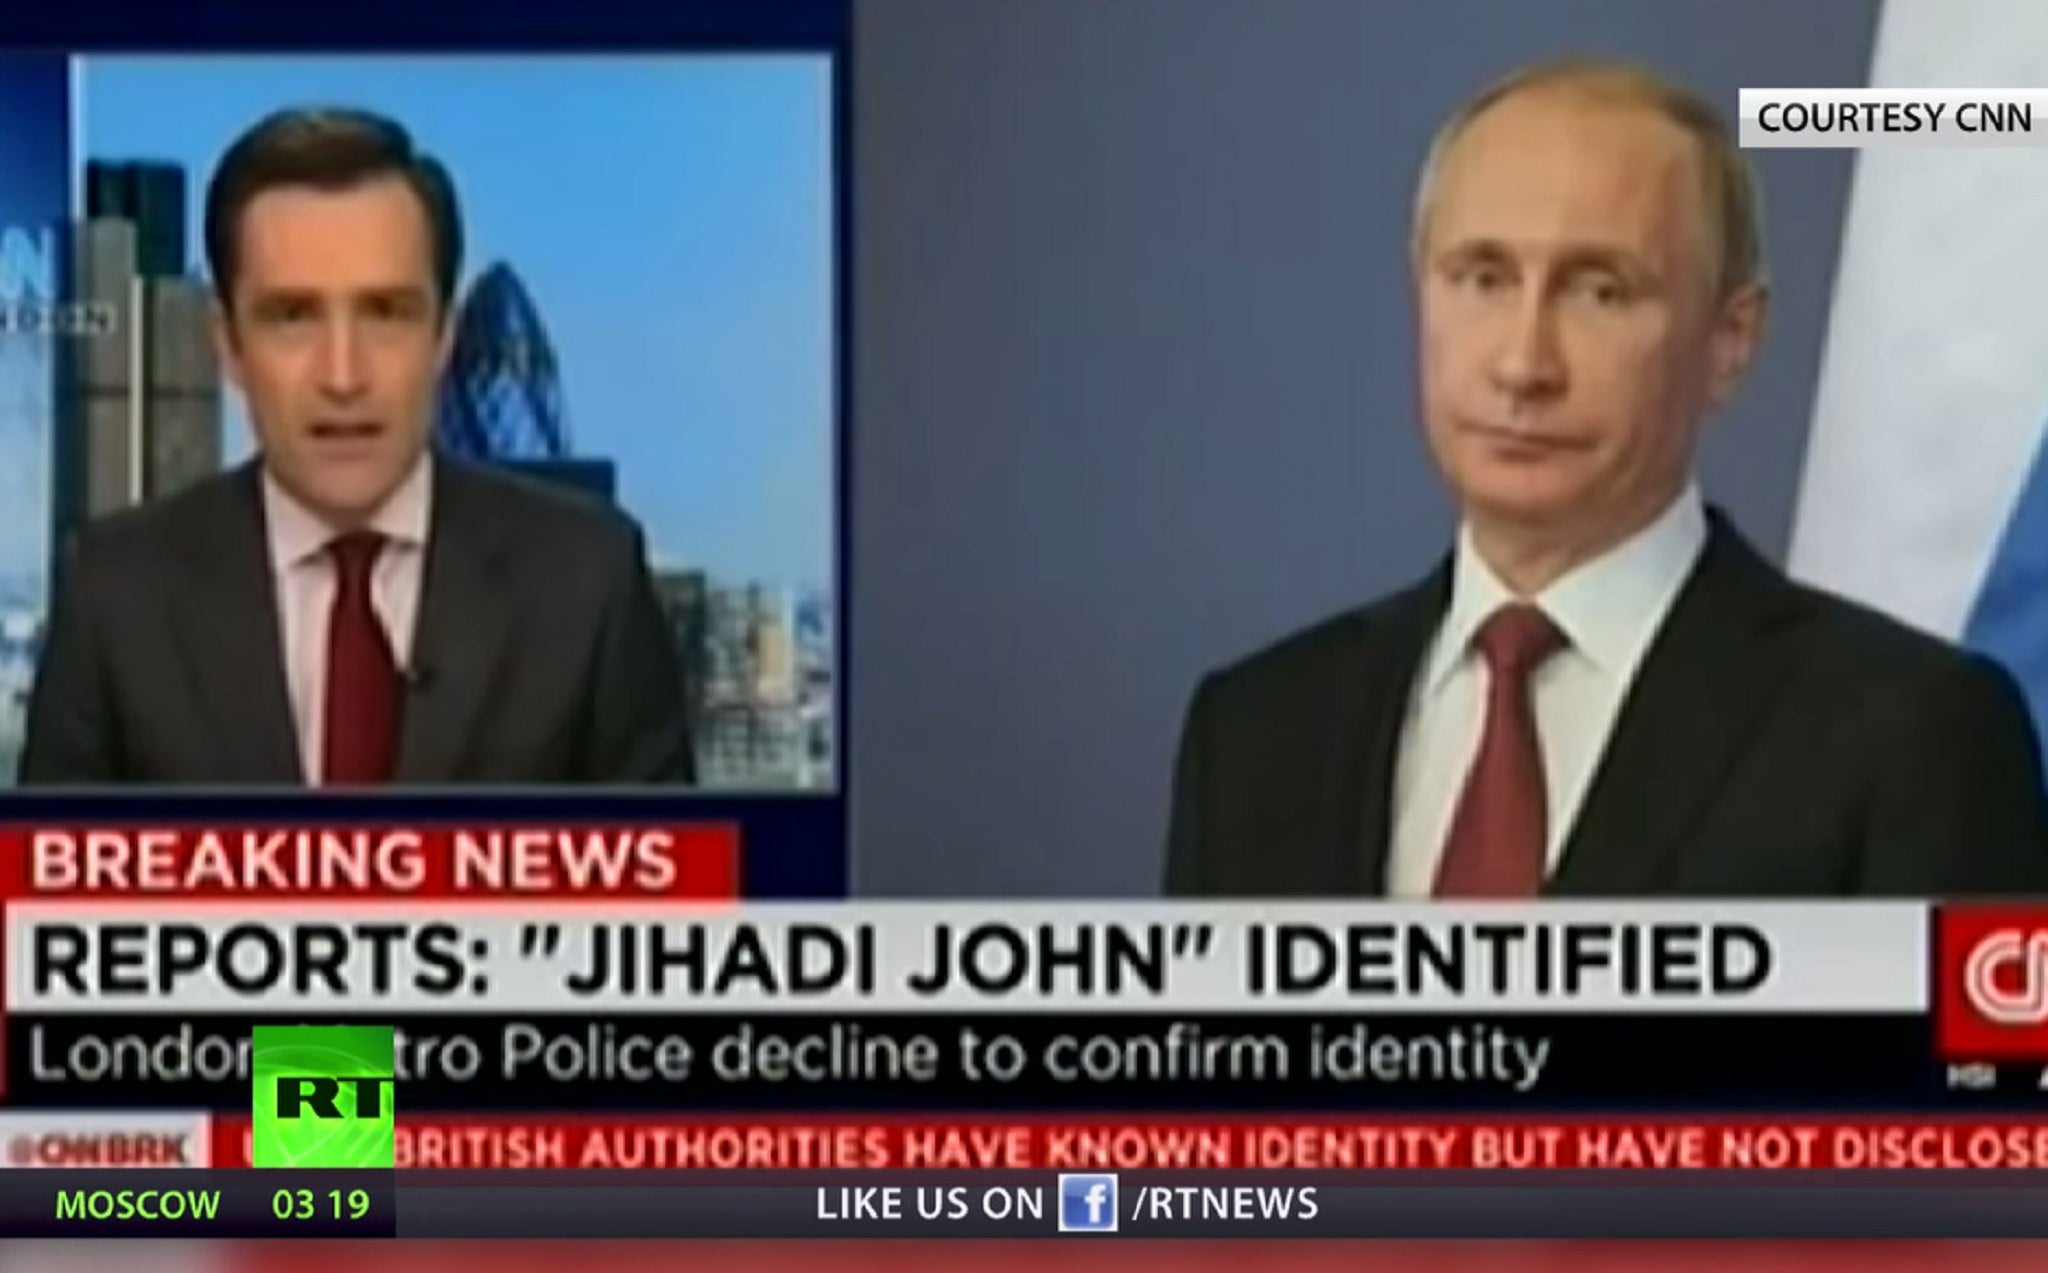 CNN showed an image of Vladimir Putin during a report on Jihadi John